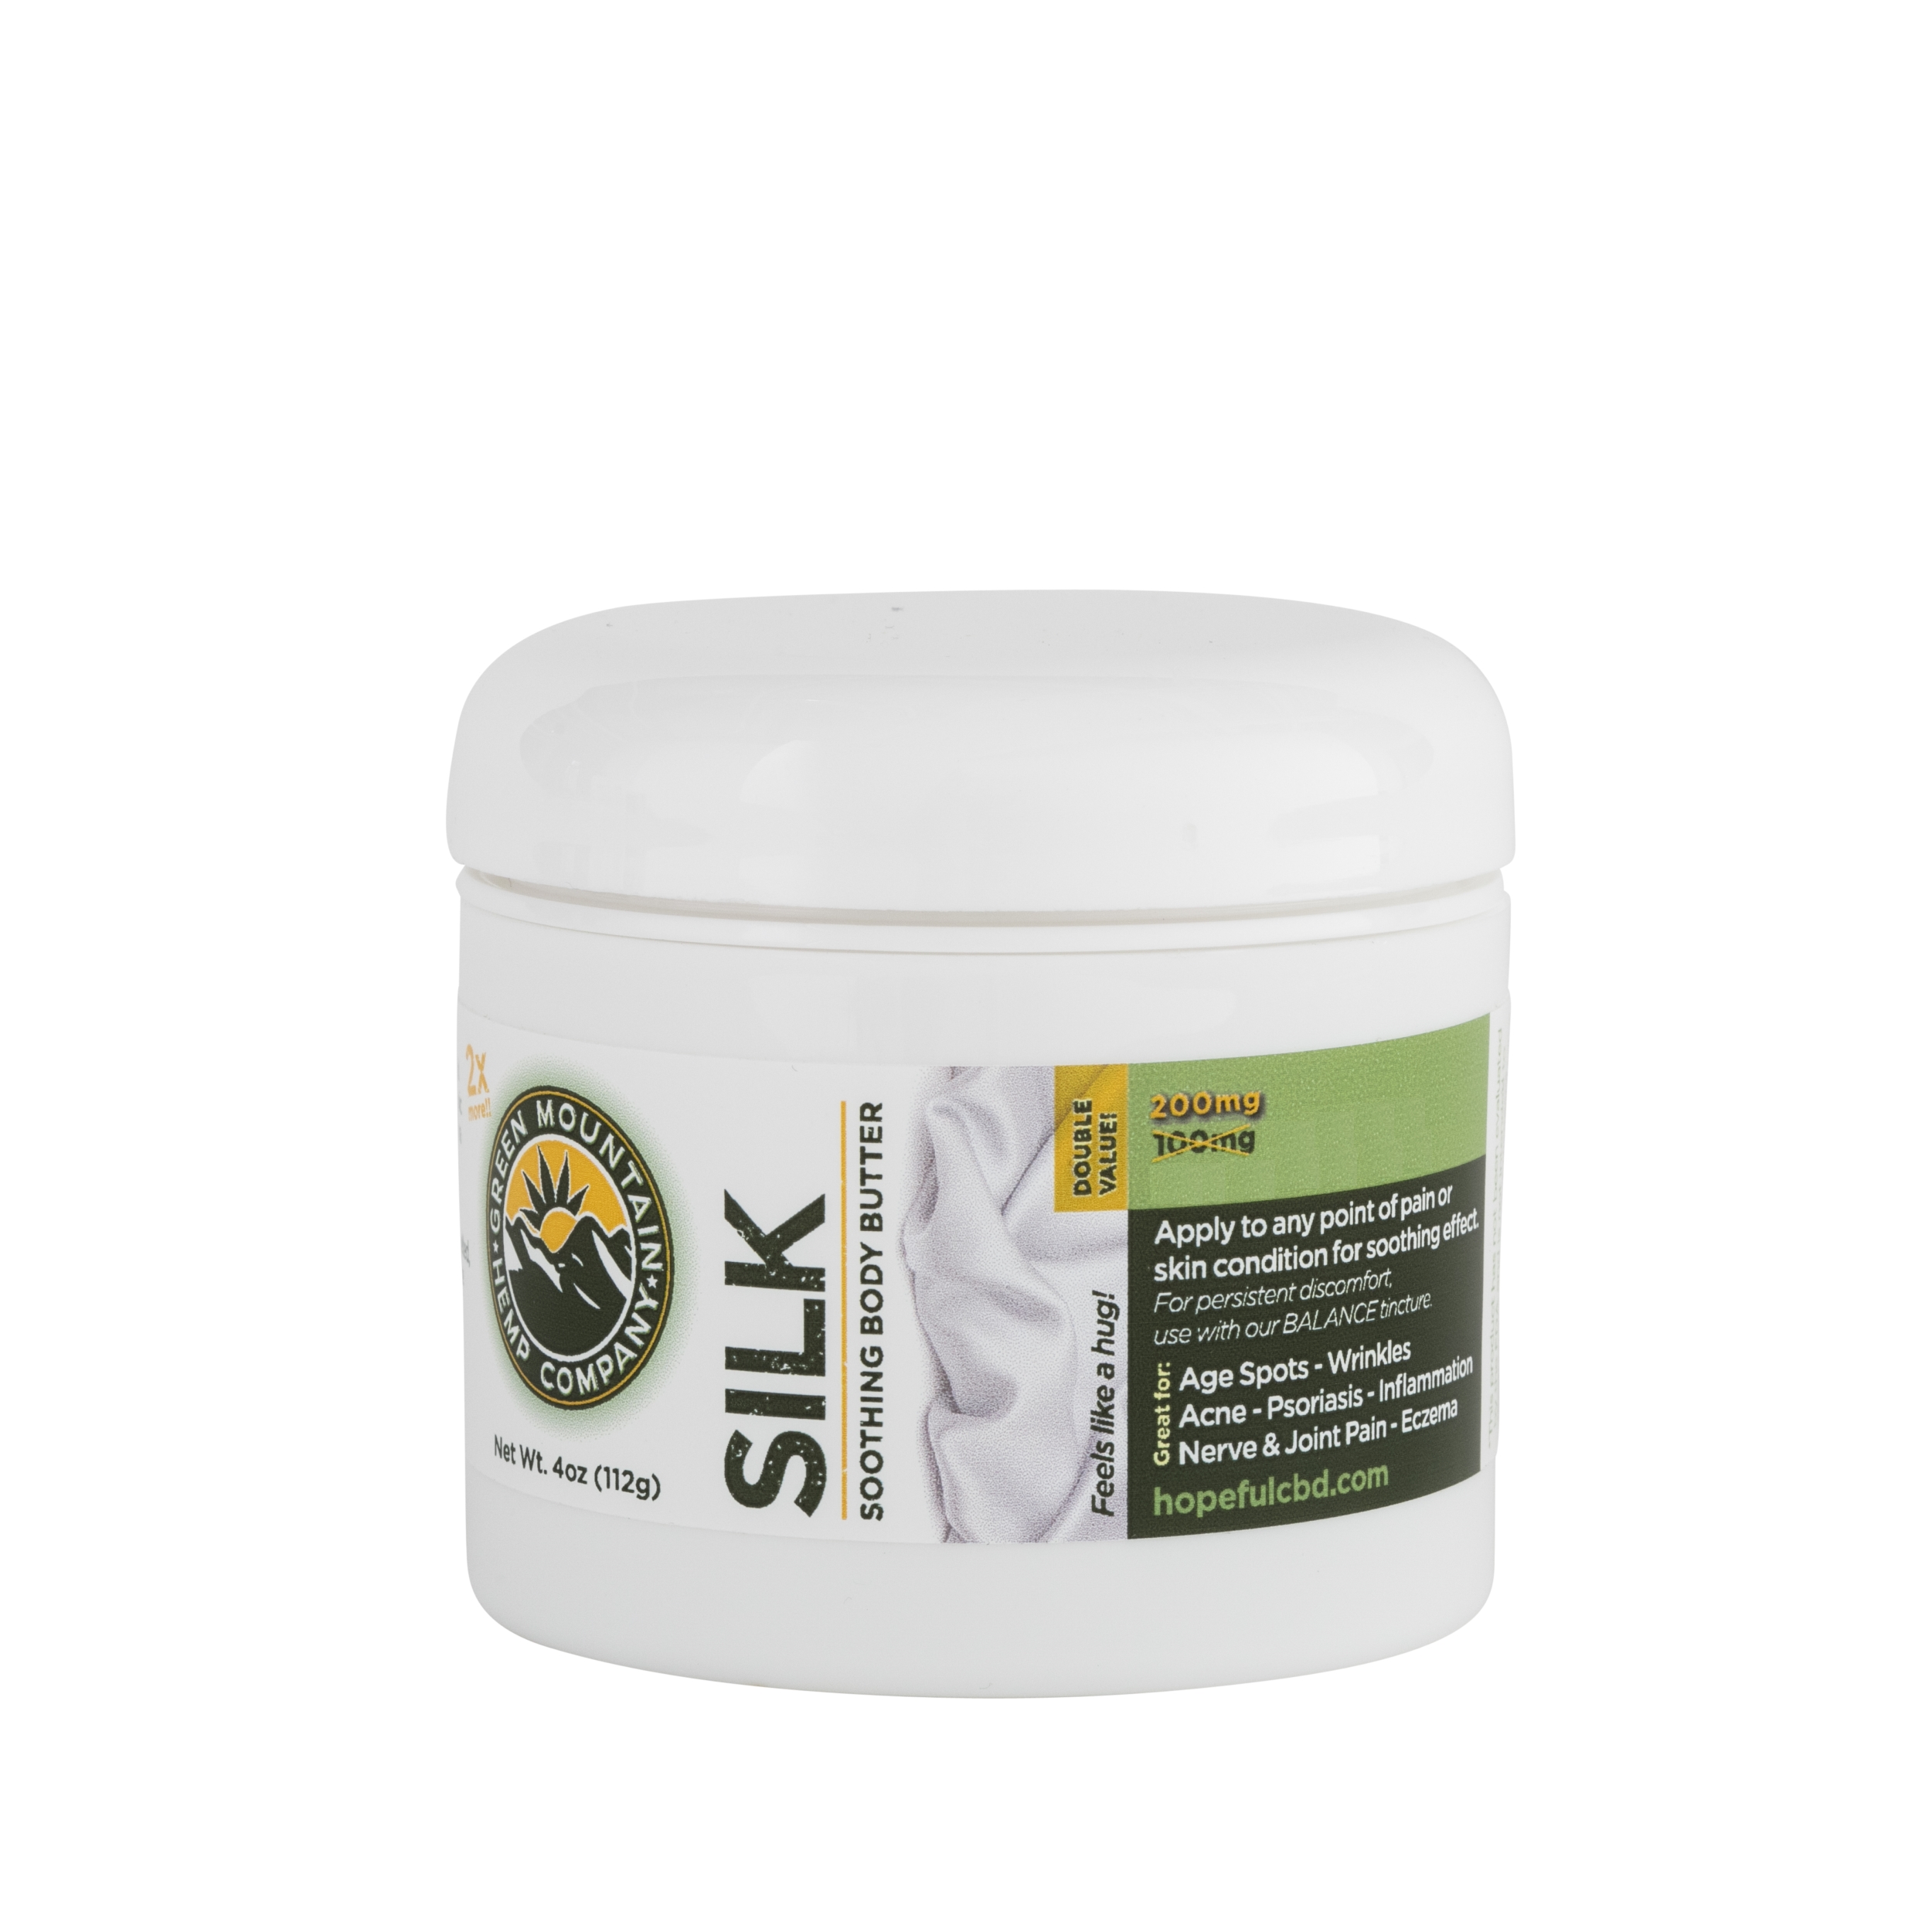 Silk CBD Cream - Hemp Cream for pain